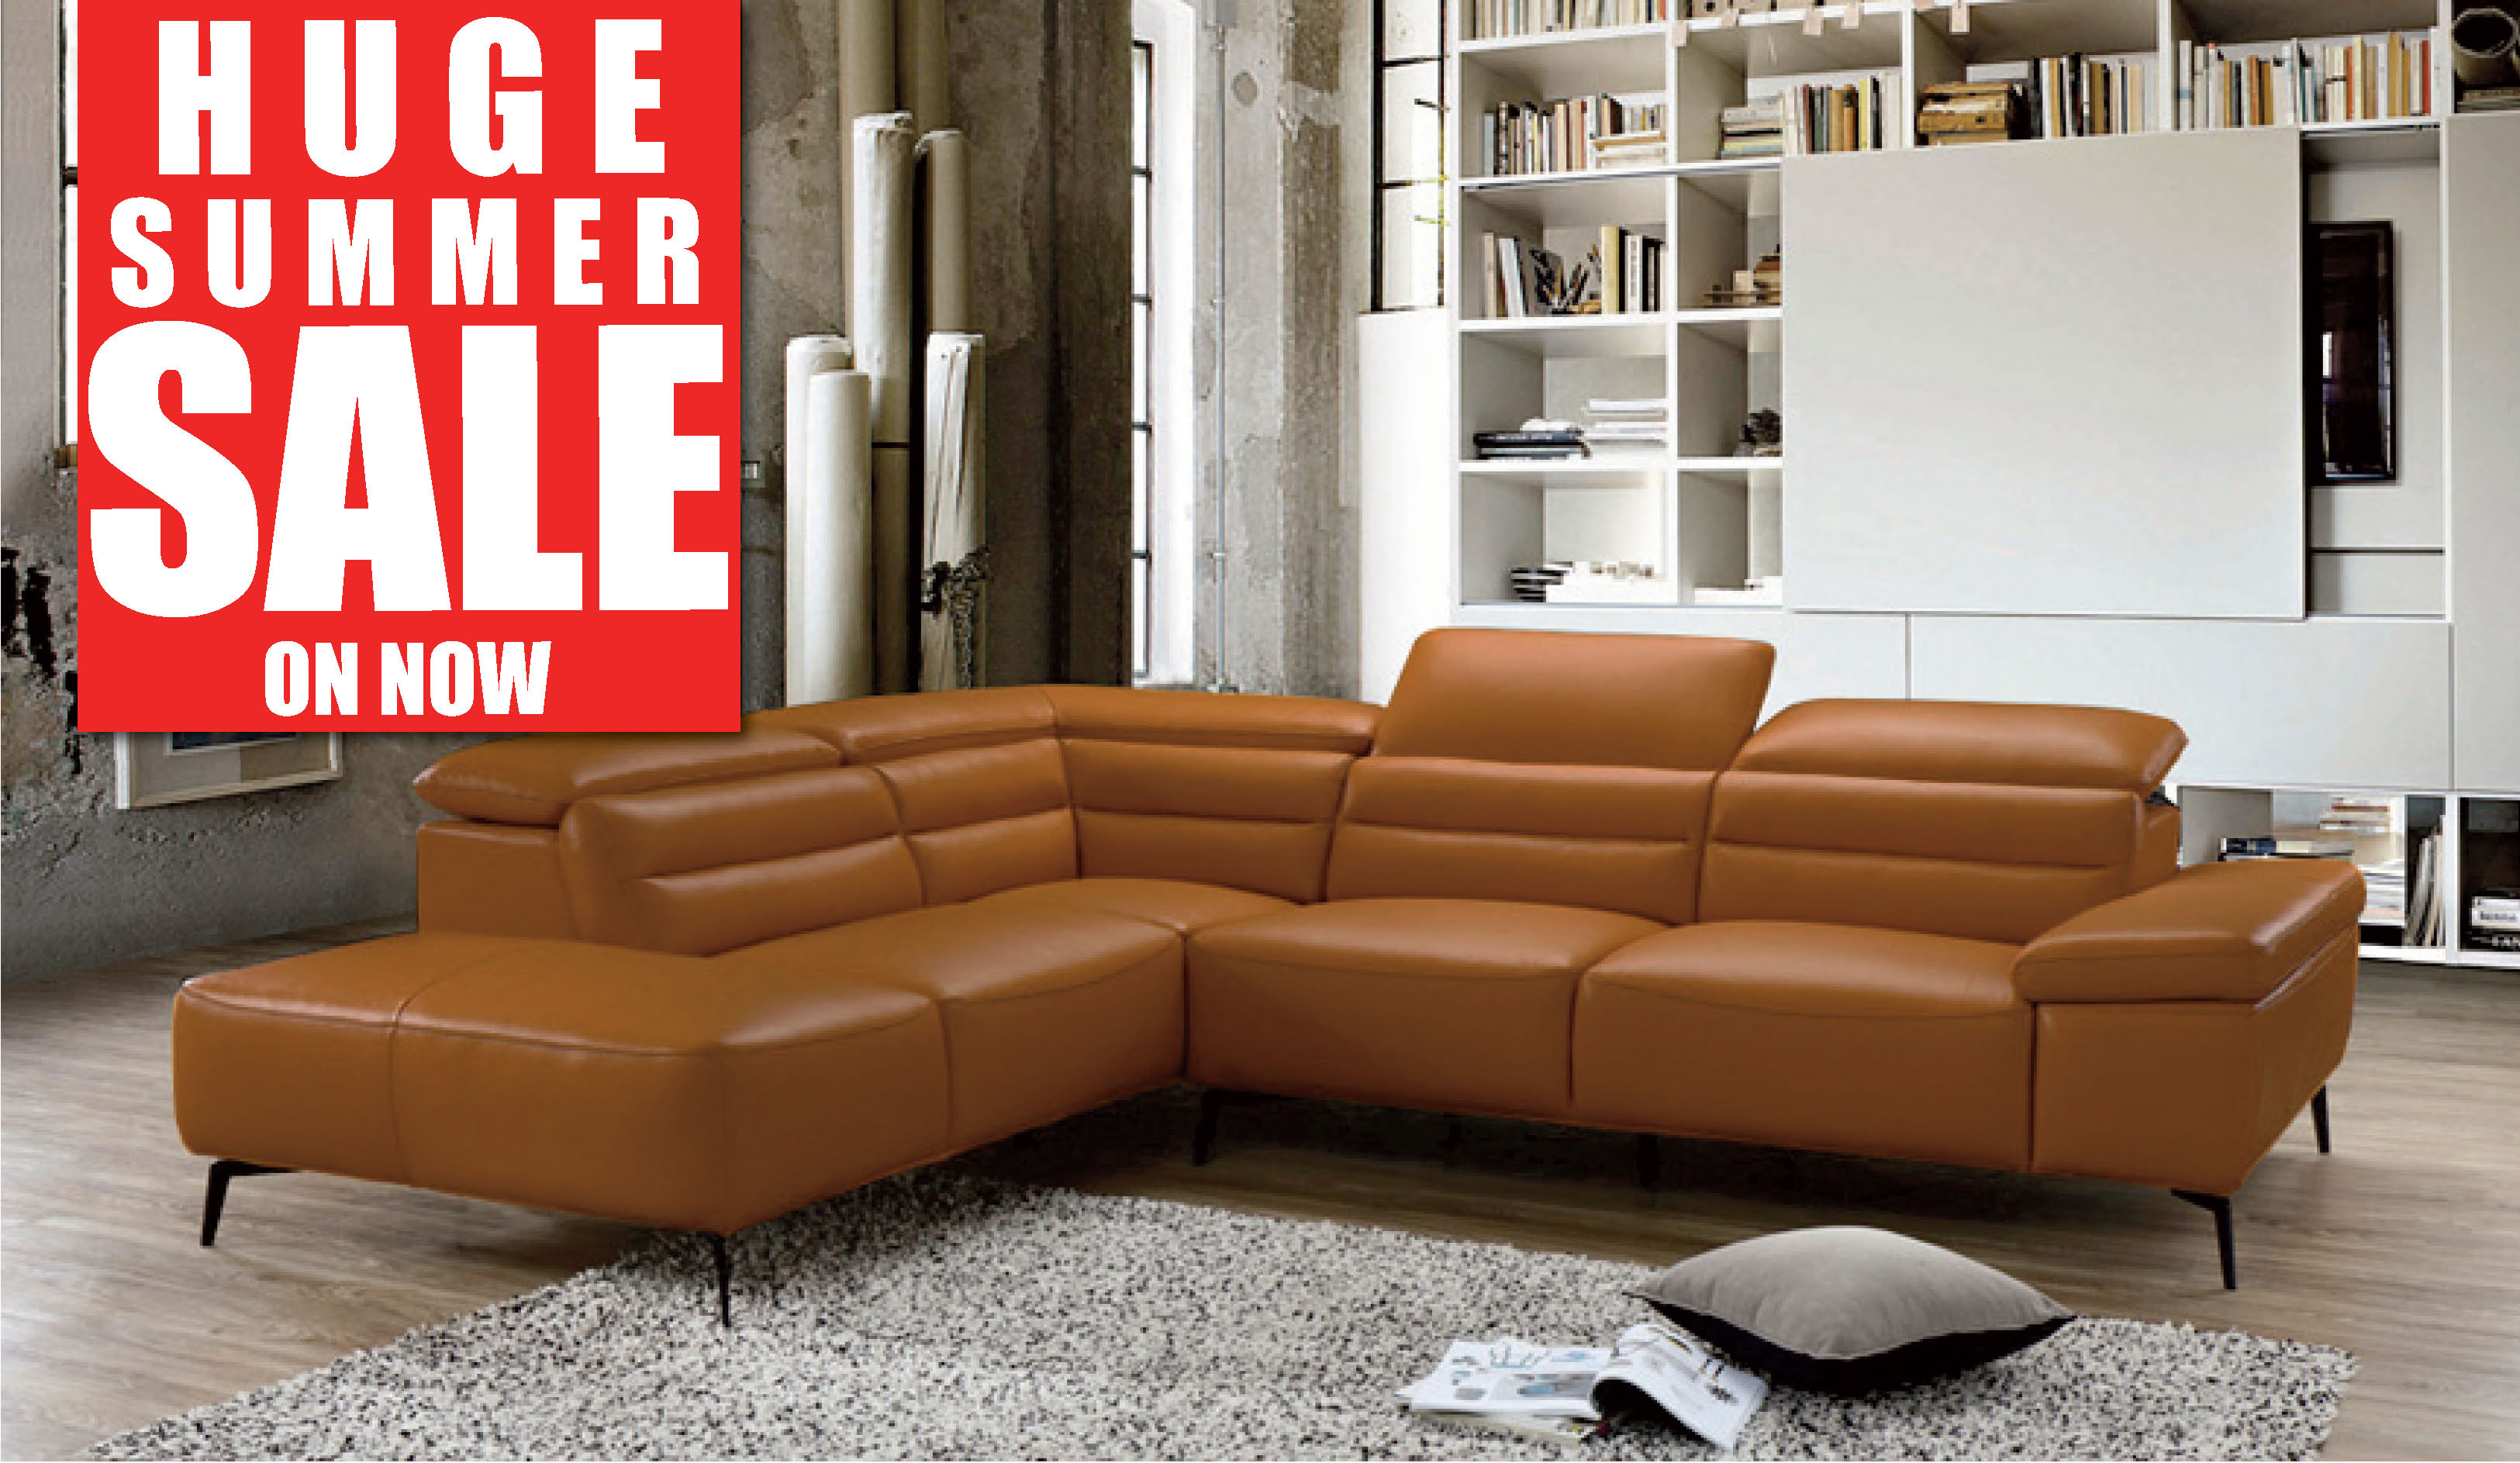 leather modular sofa perth